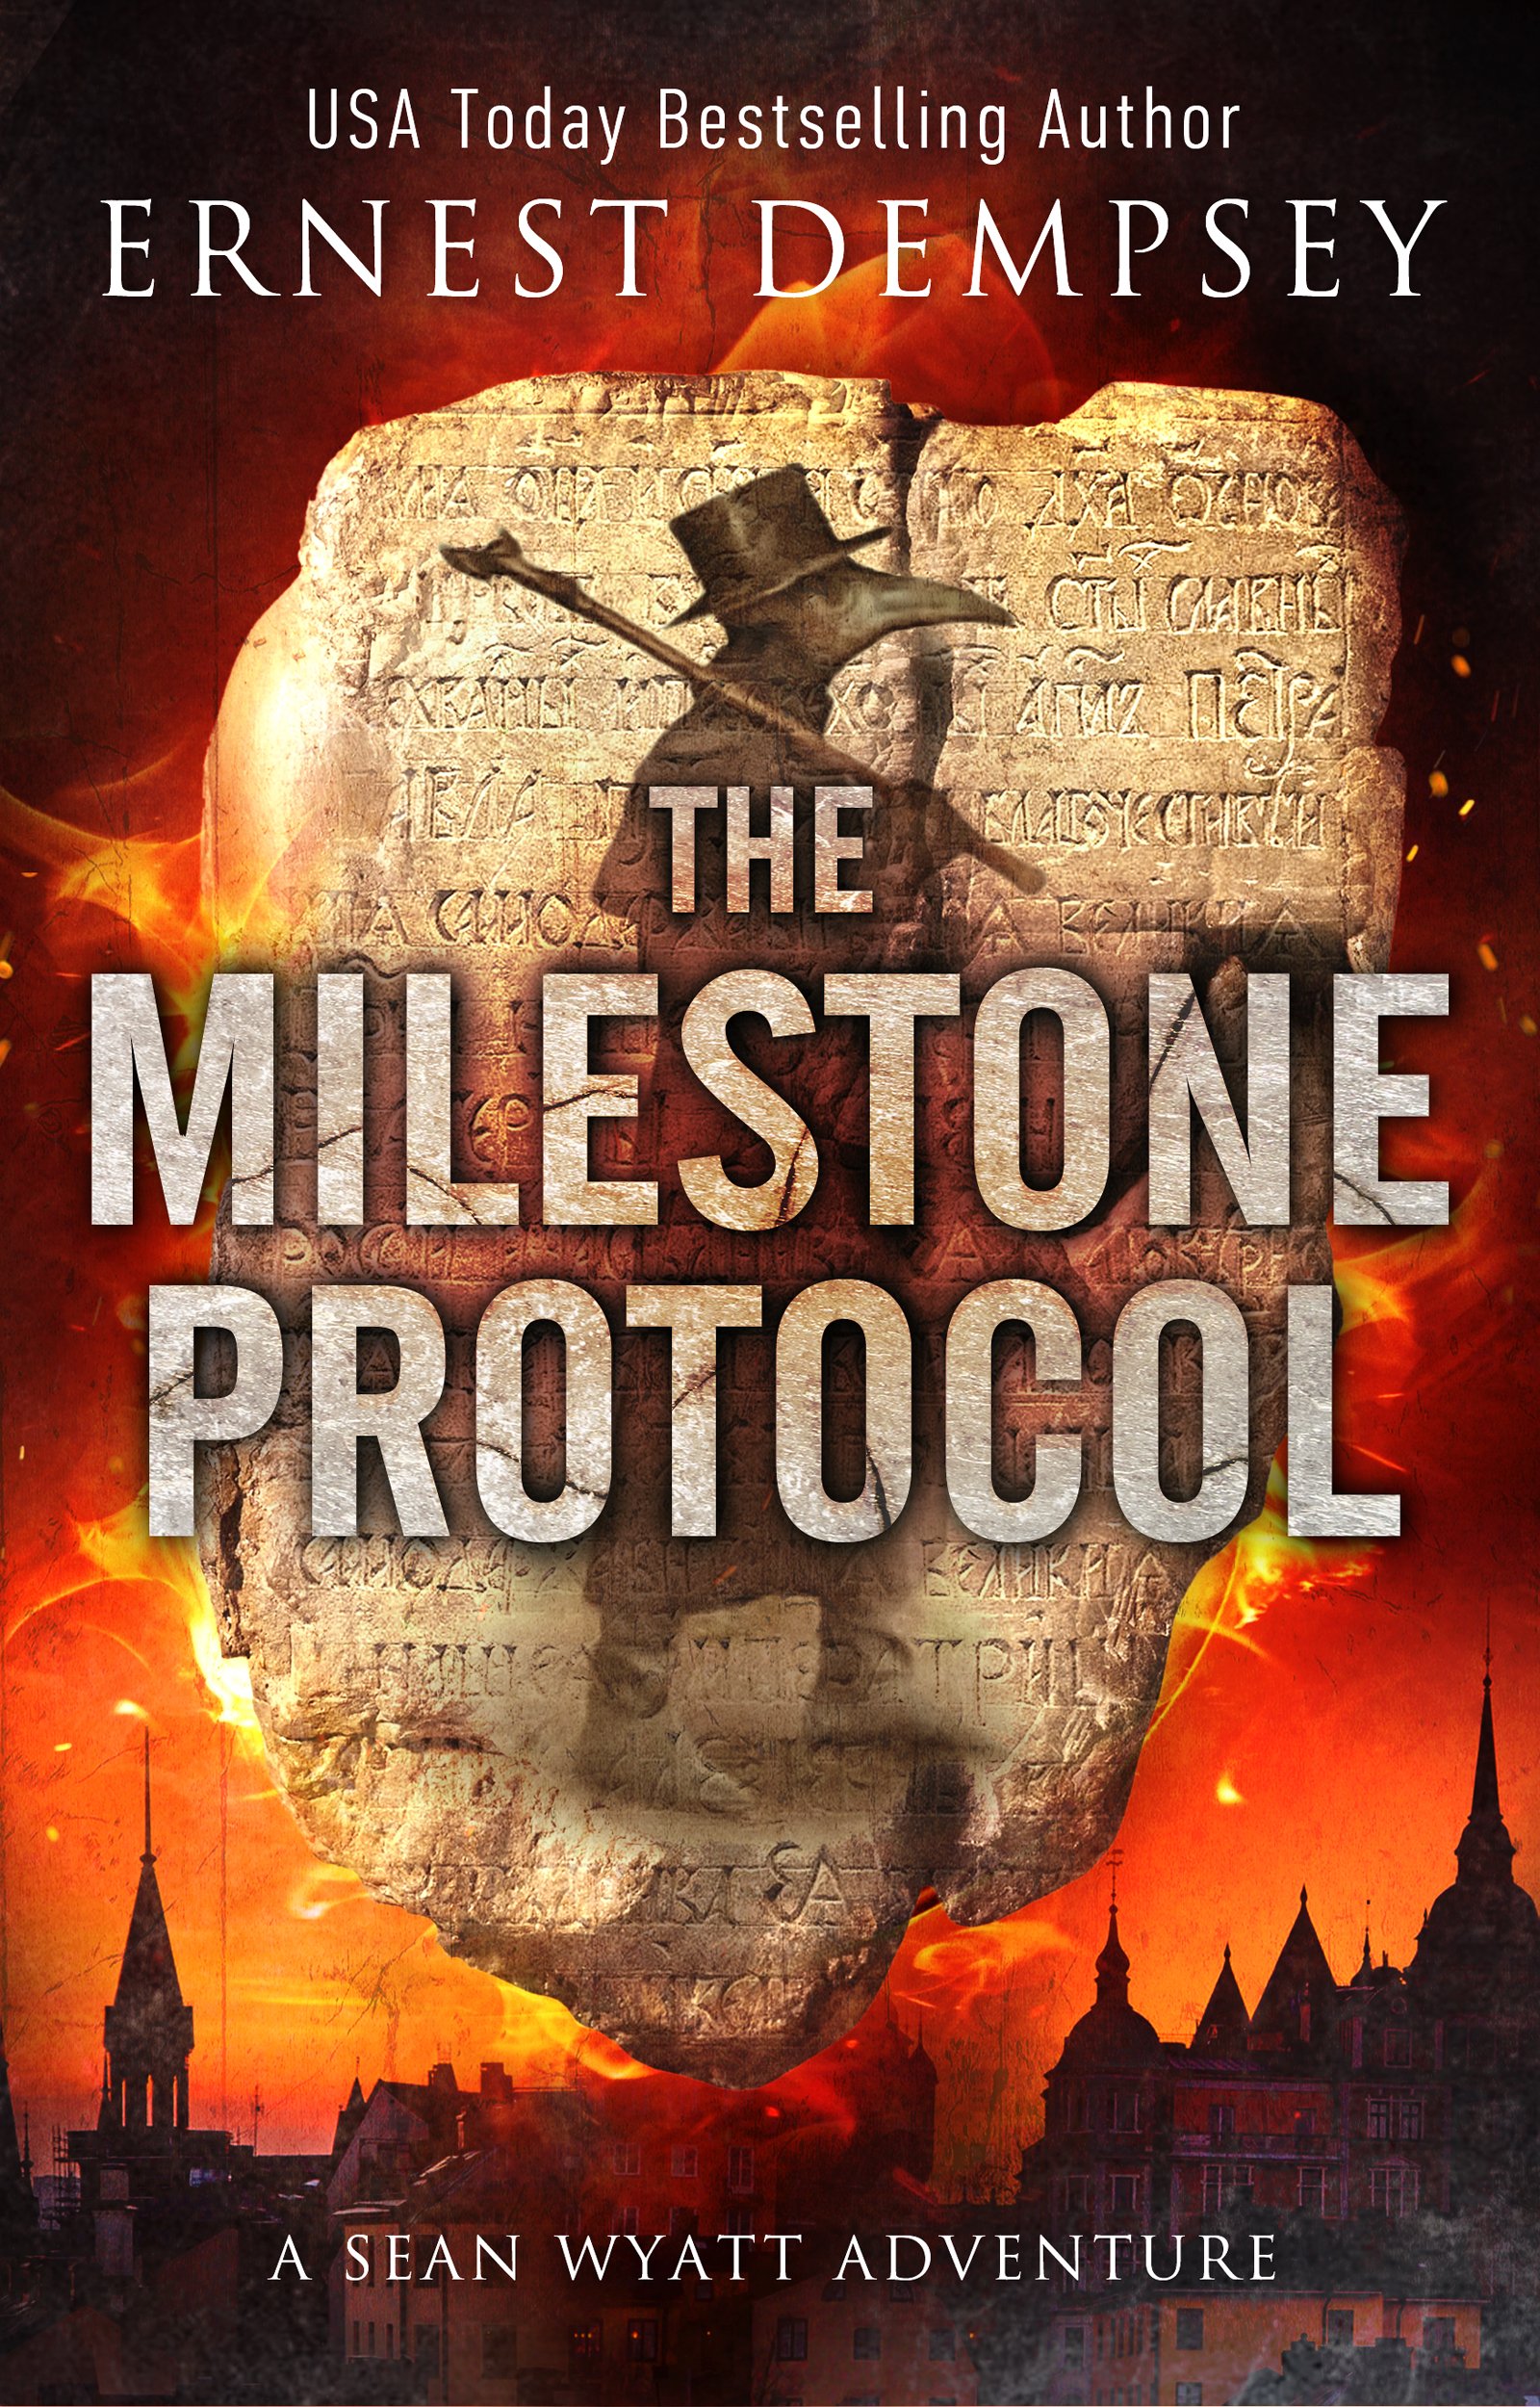 milestone protocol ebook cover.jpg